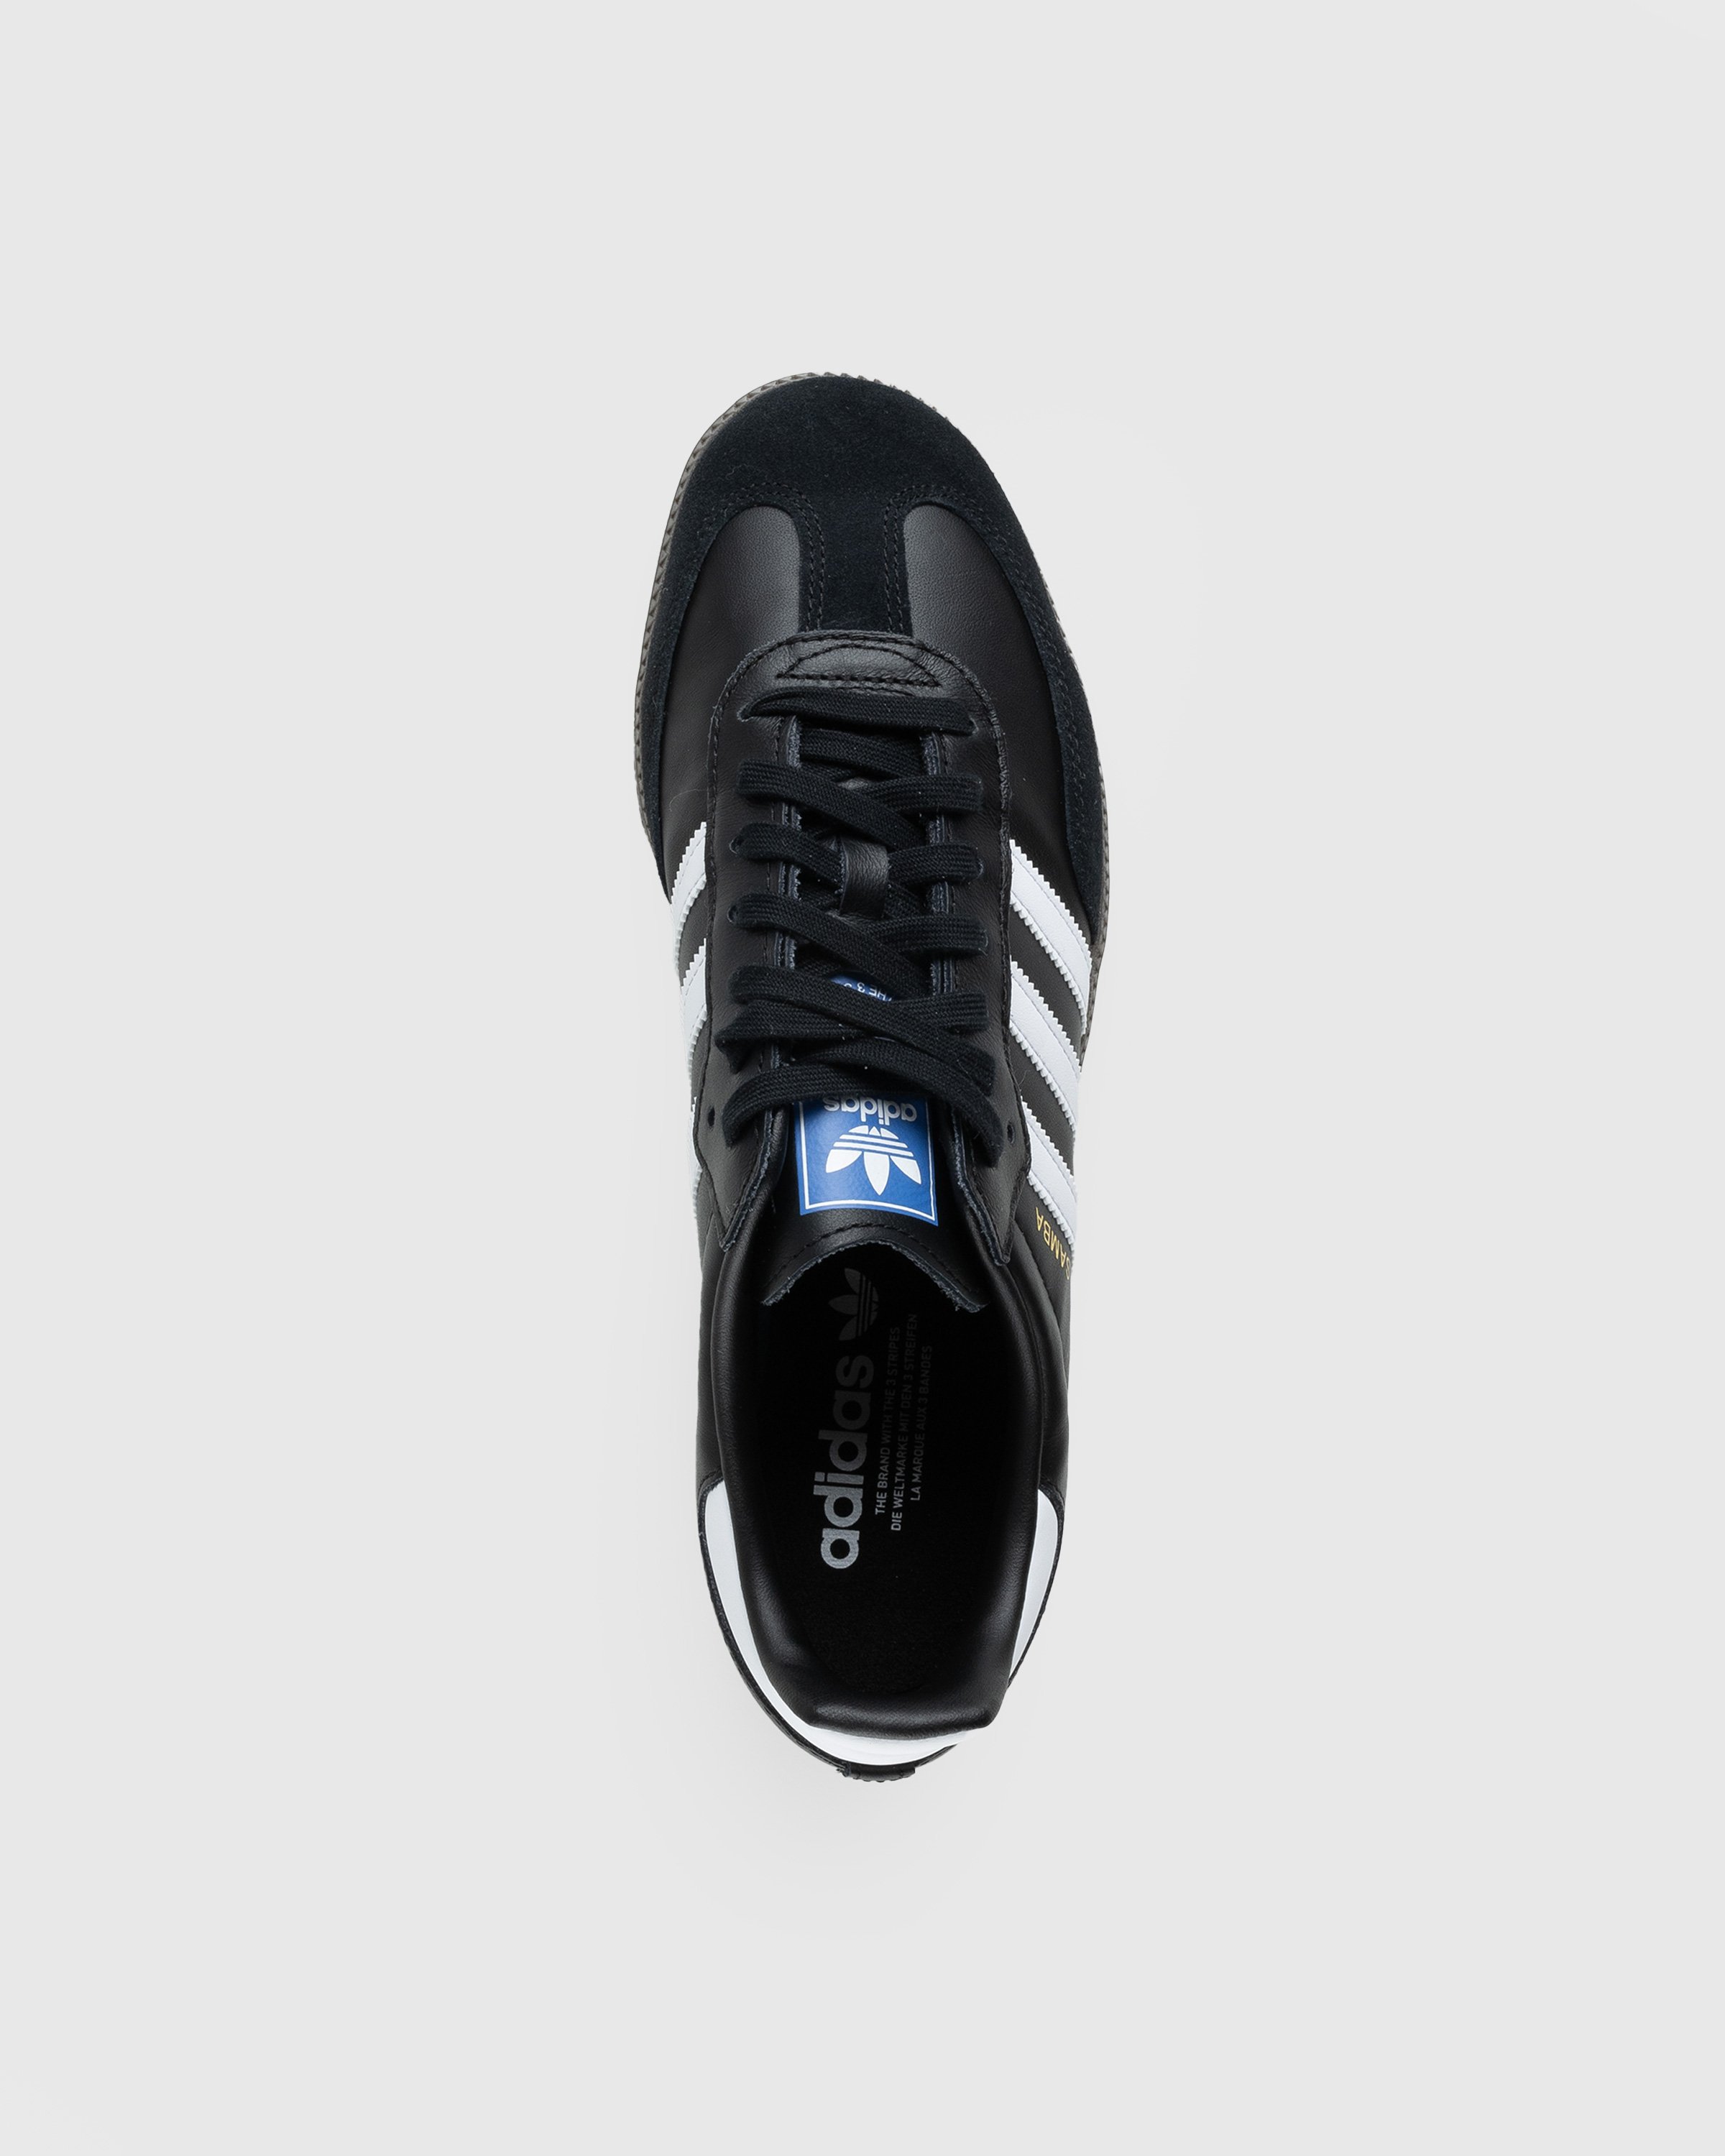 Adidas - Samba OG Black/White/Gum - Footwear - Black - Image 5